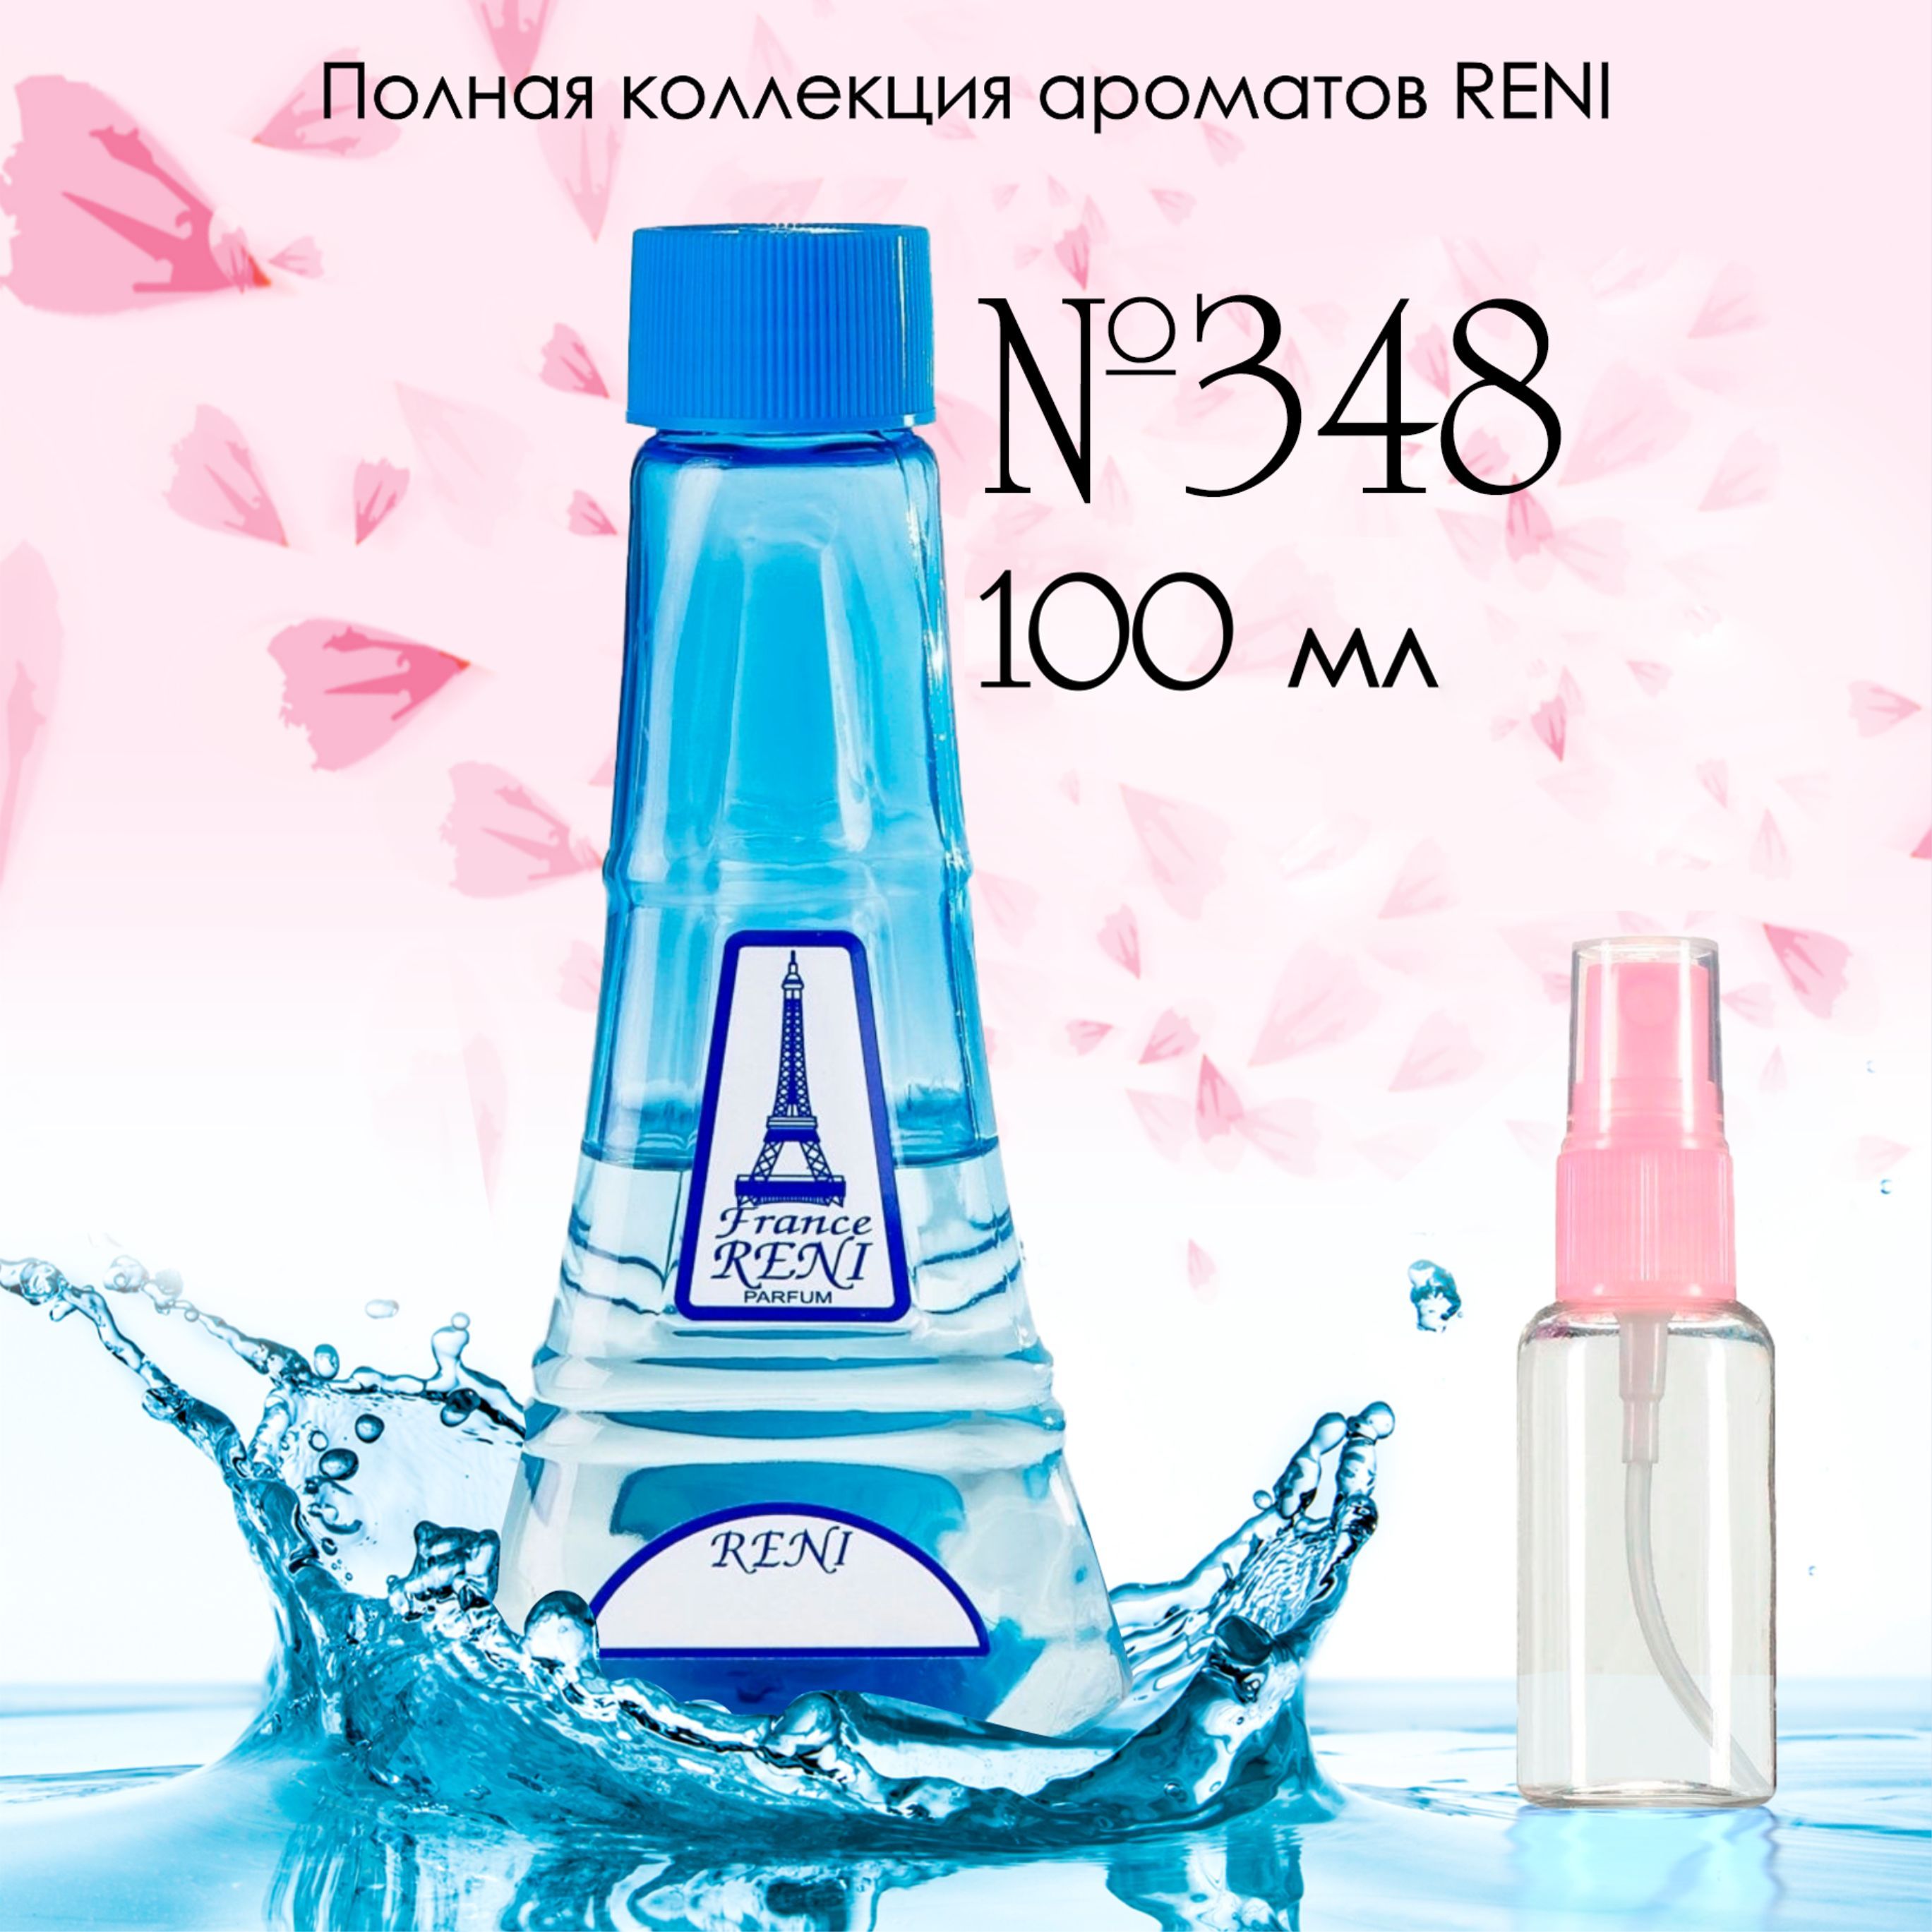 Reni 398. Рени 223 наливная парфюмерия Reni Parfum. Reni 334 наливная парфюмерия Рени. Духи Рени 439.